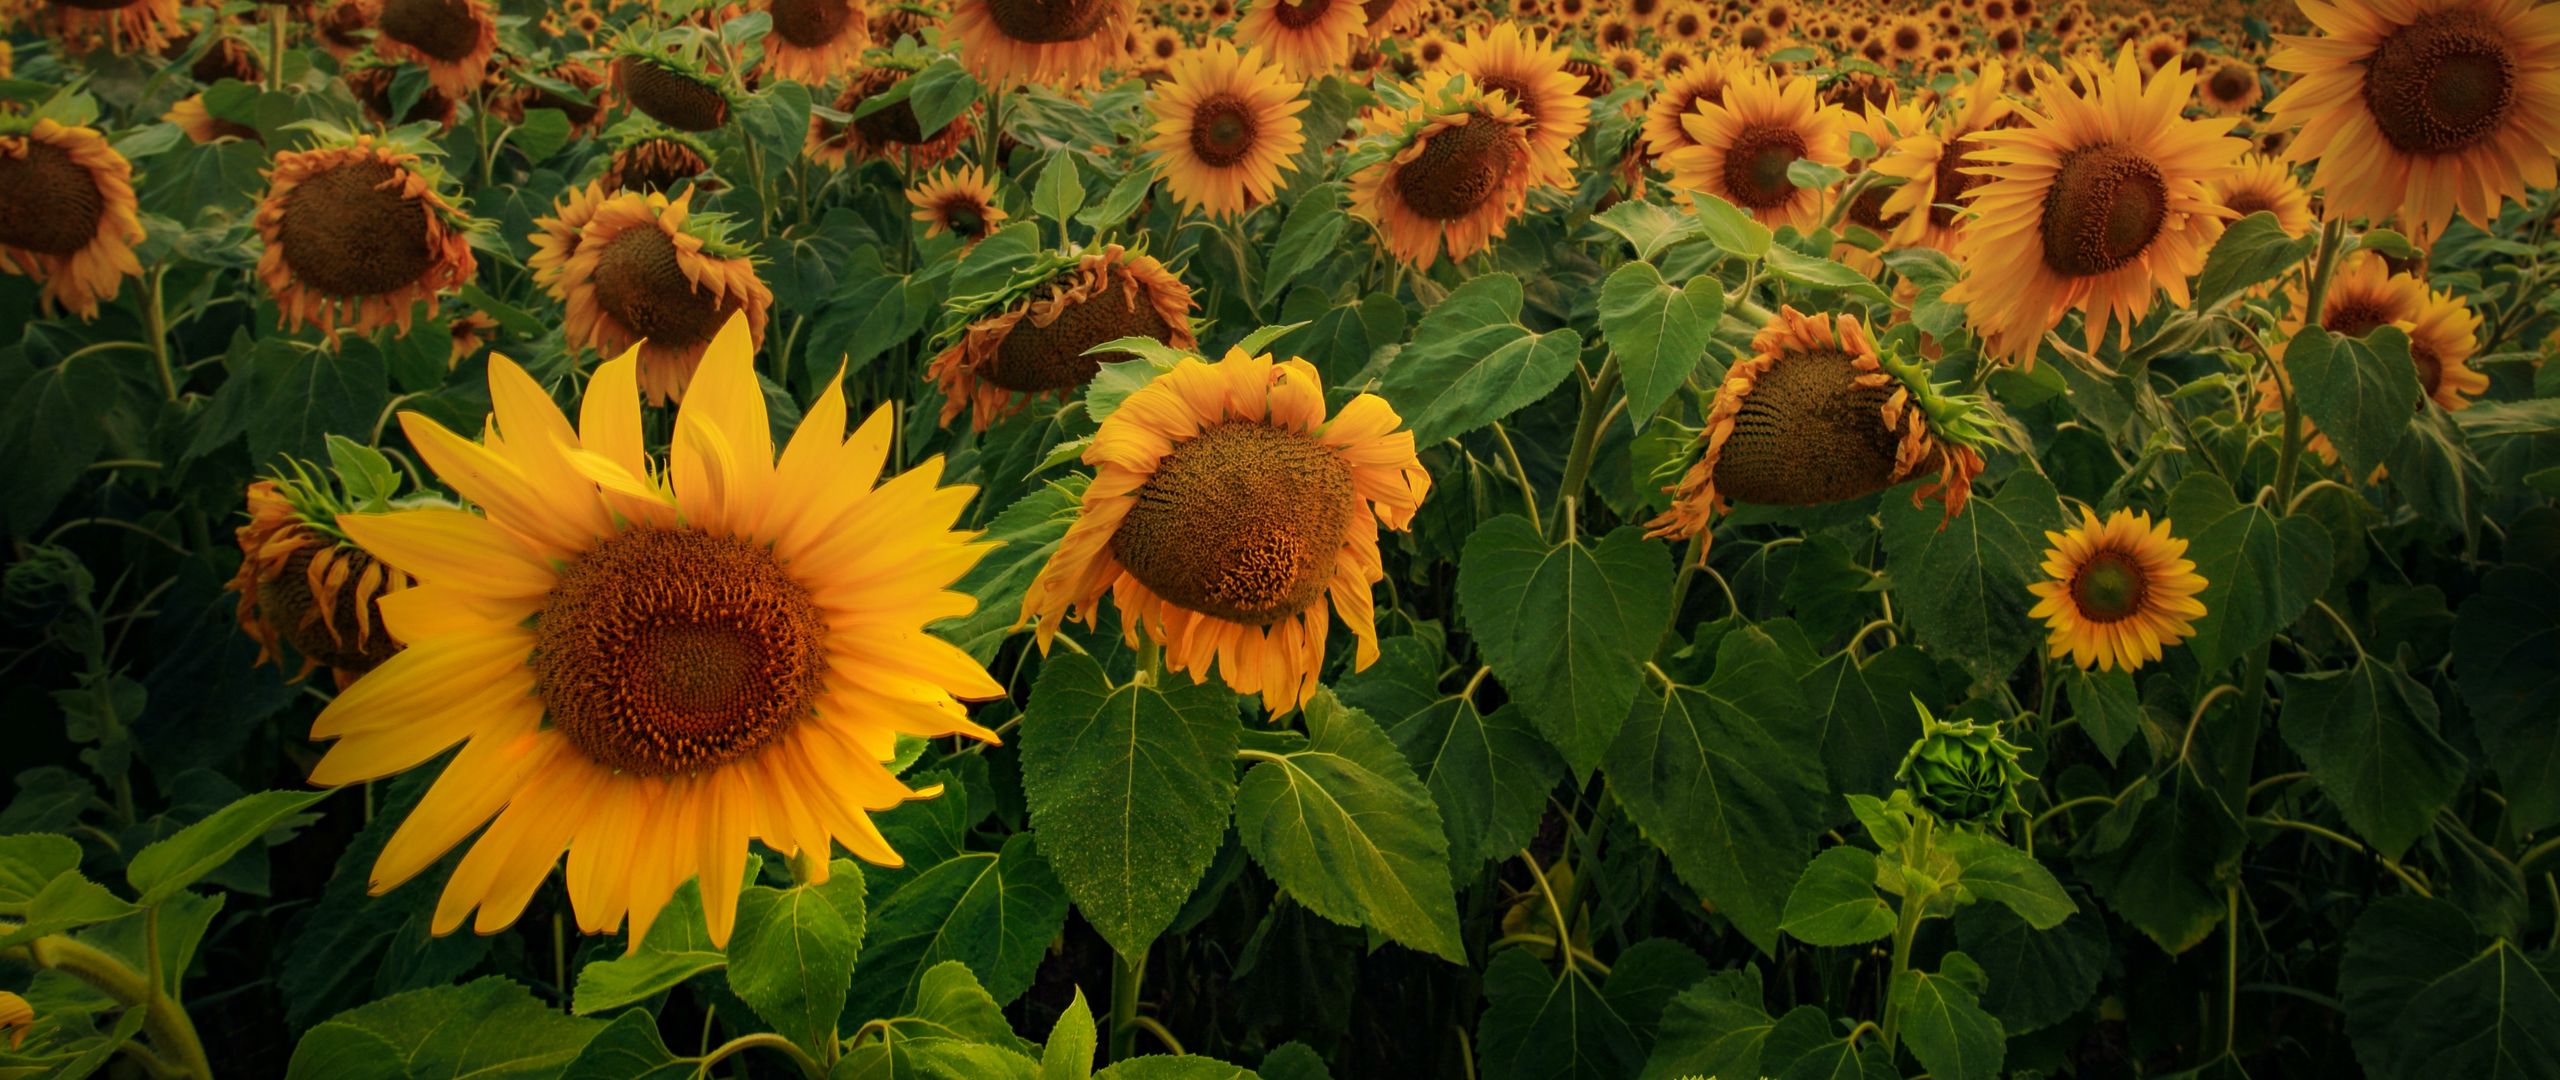 Download Wallpaper 2560x1080 Sunflowers Flowers Field Forest Dual